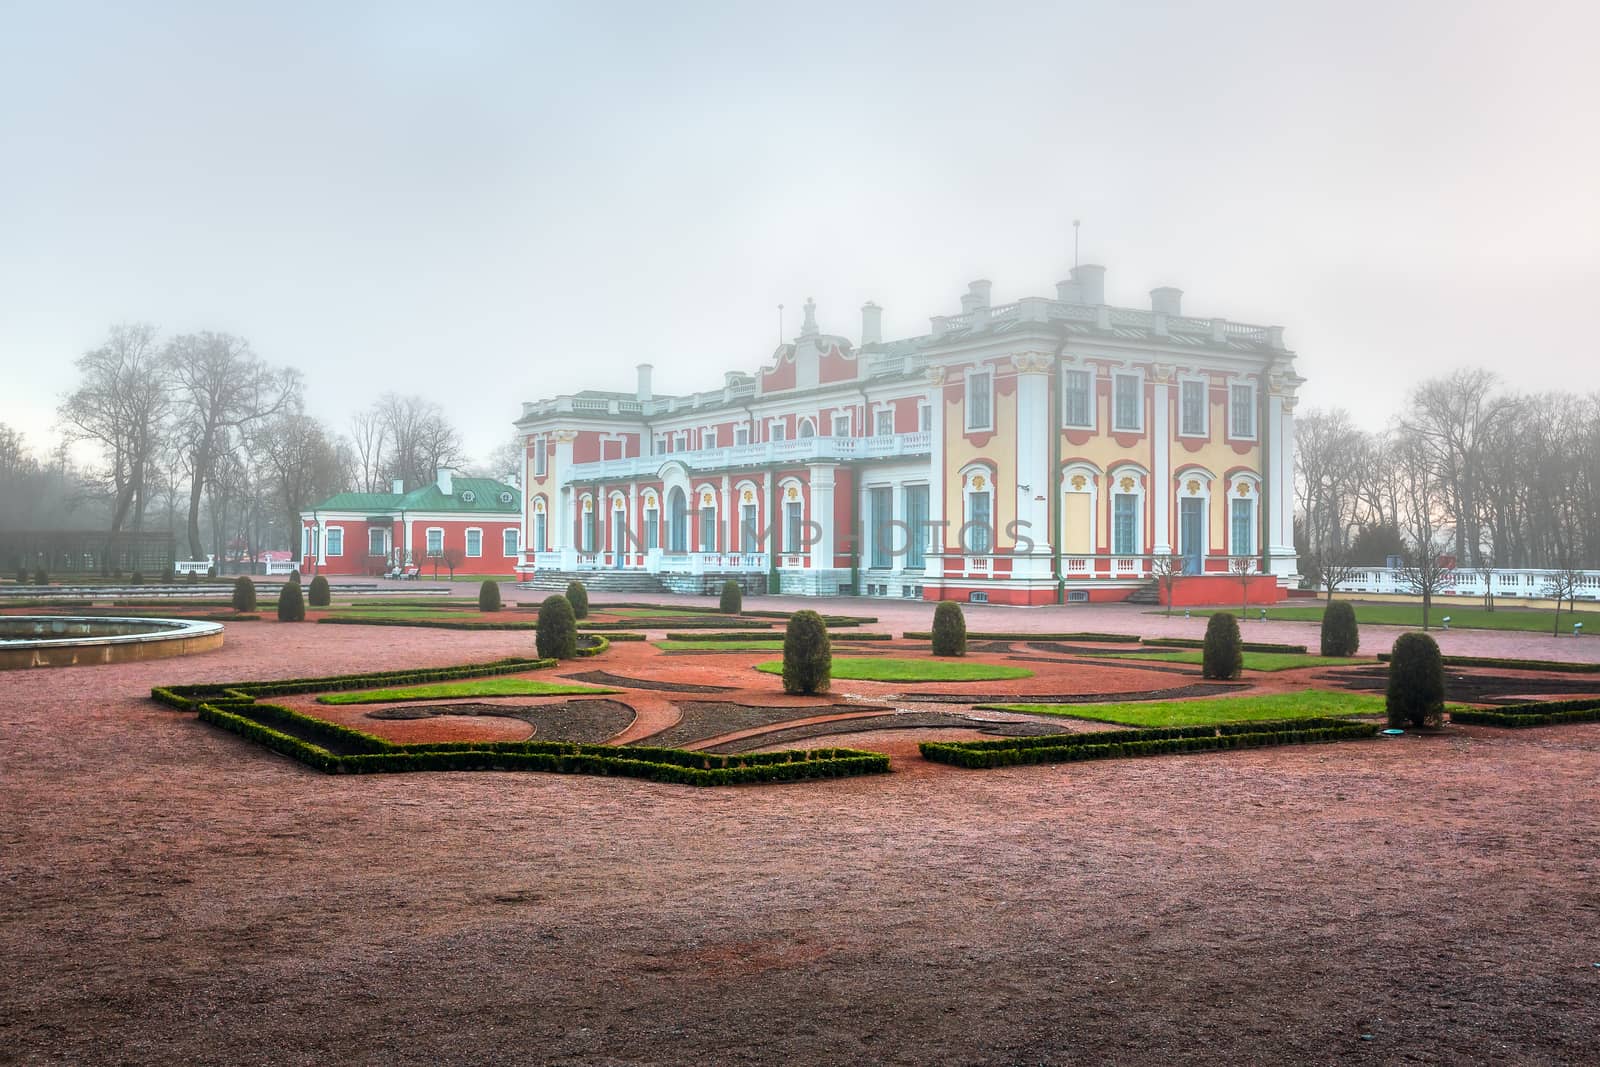 The Kadriorg Palace built by Tsar Peter the Great in Tallinn, Es by anshar